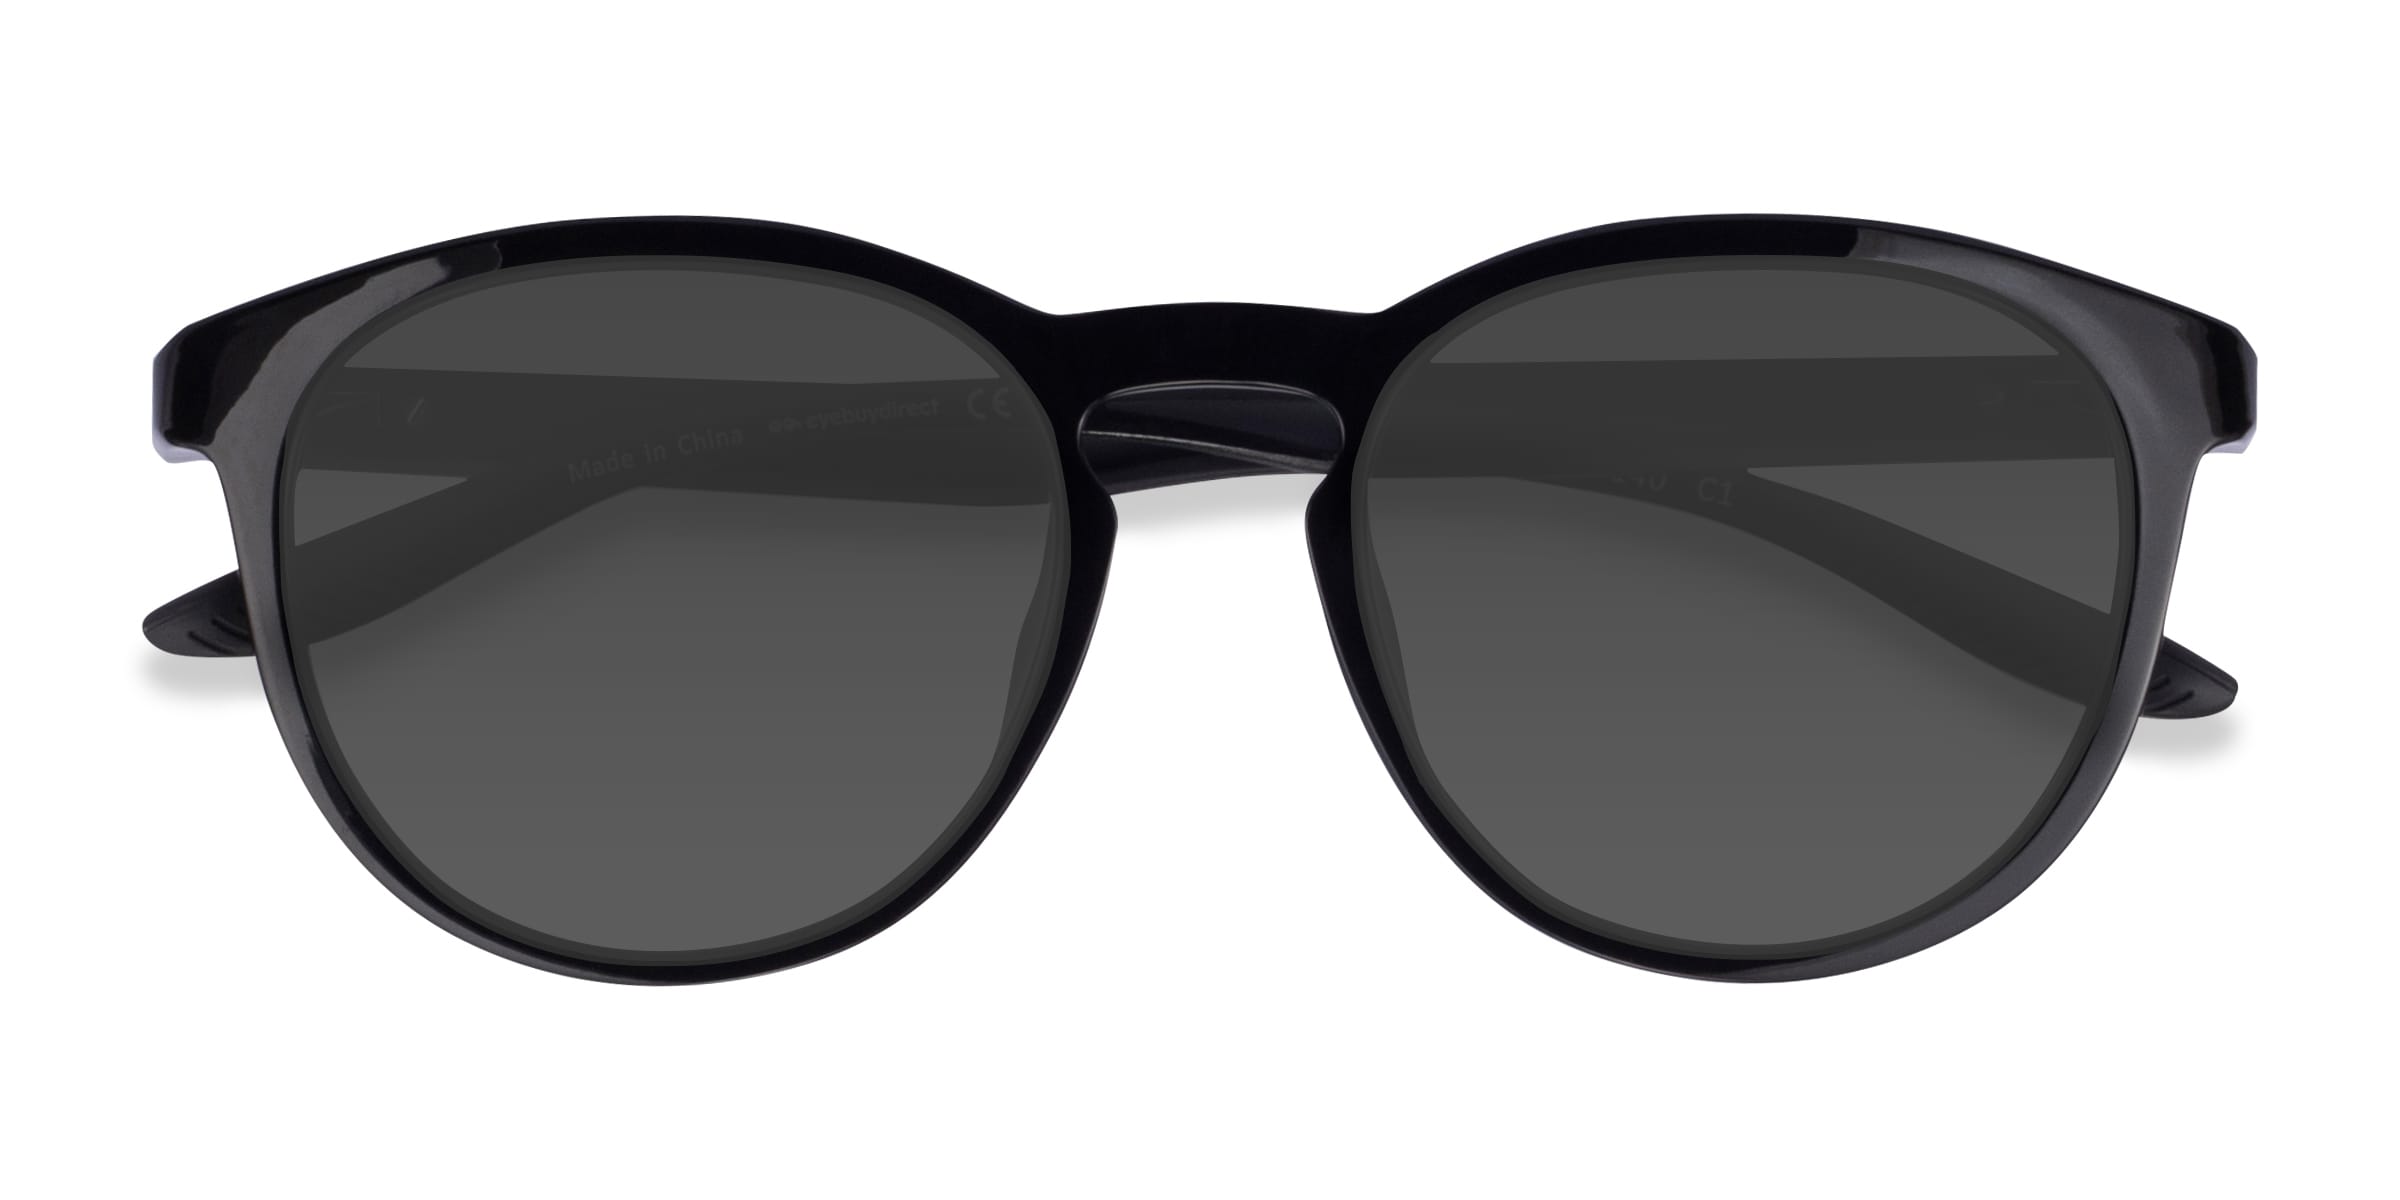 Elan - Round Shiny Black Frame Prescription Sunglasses | Eyebuydirect